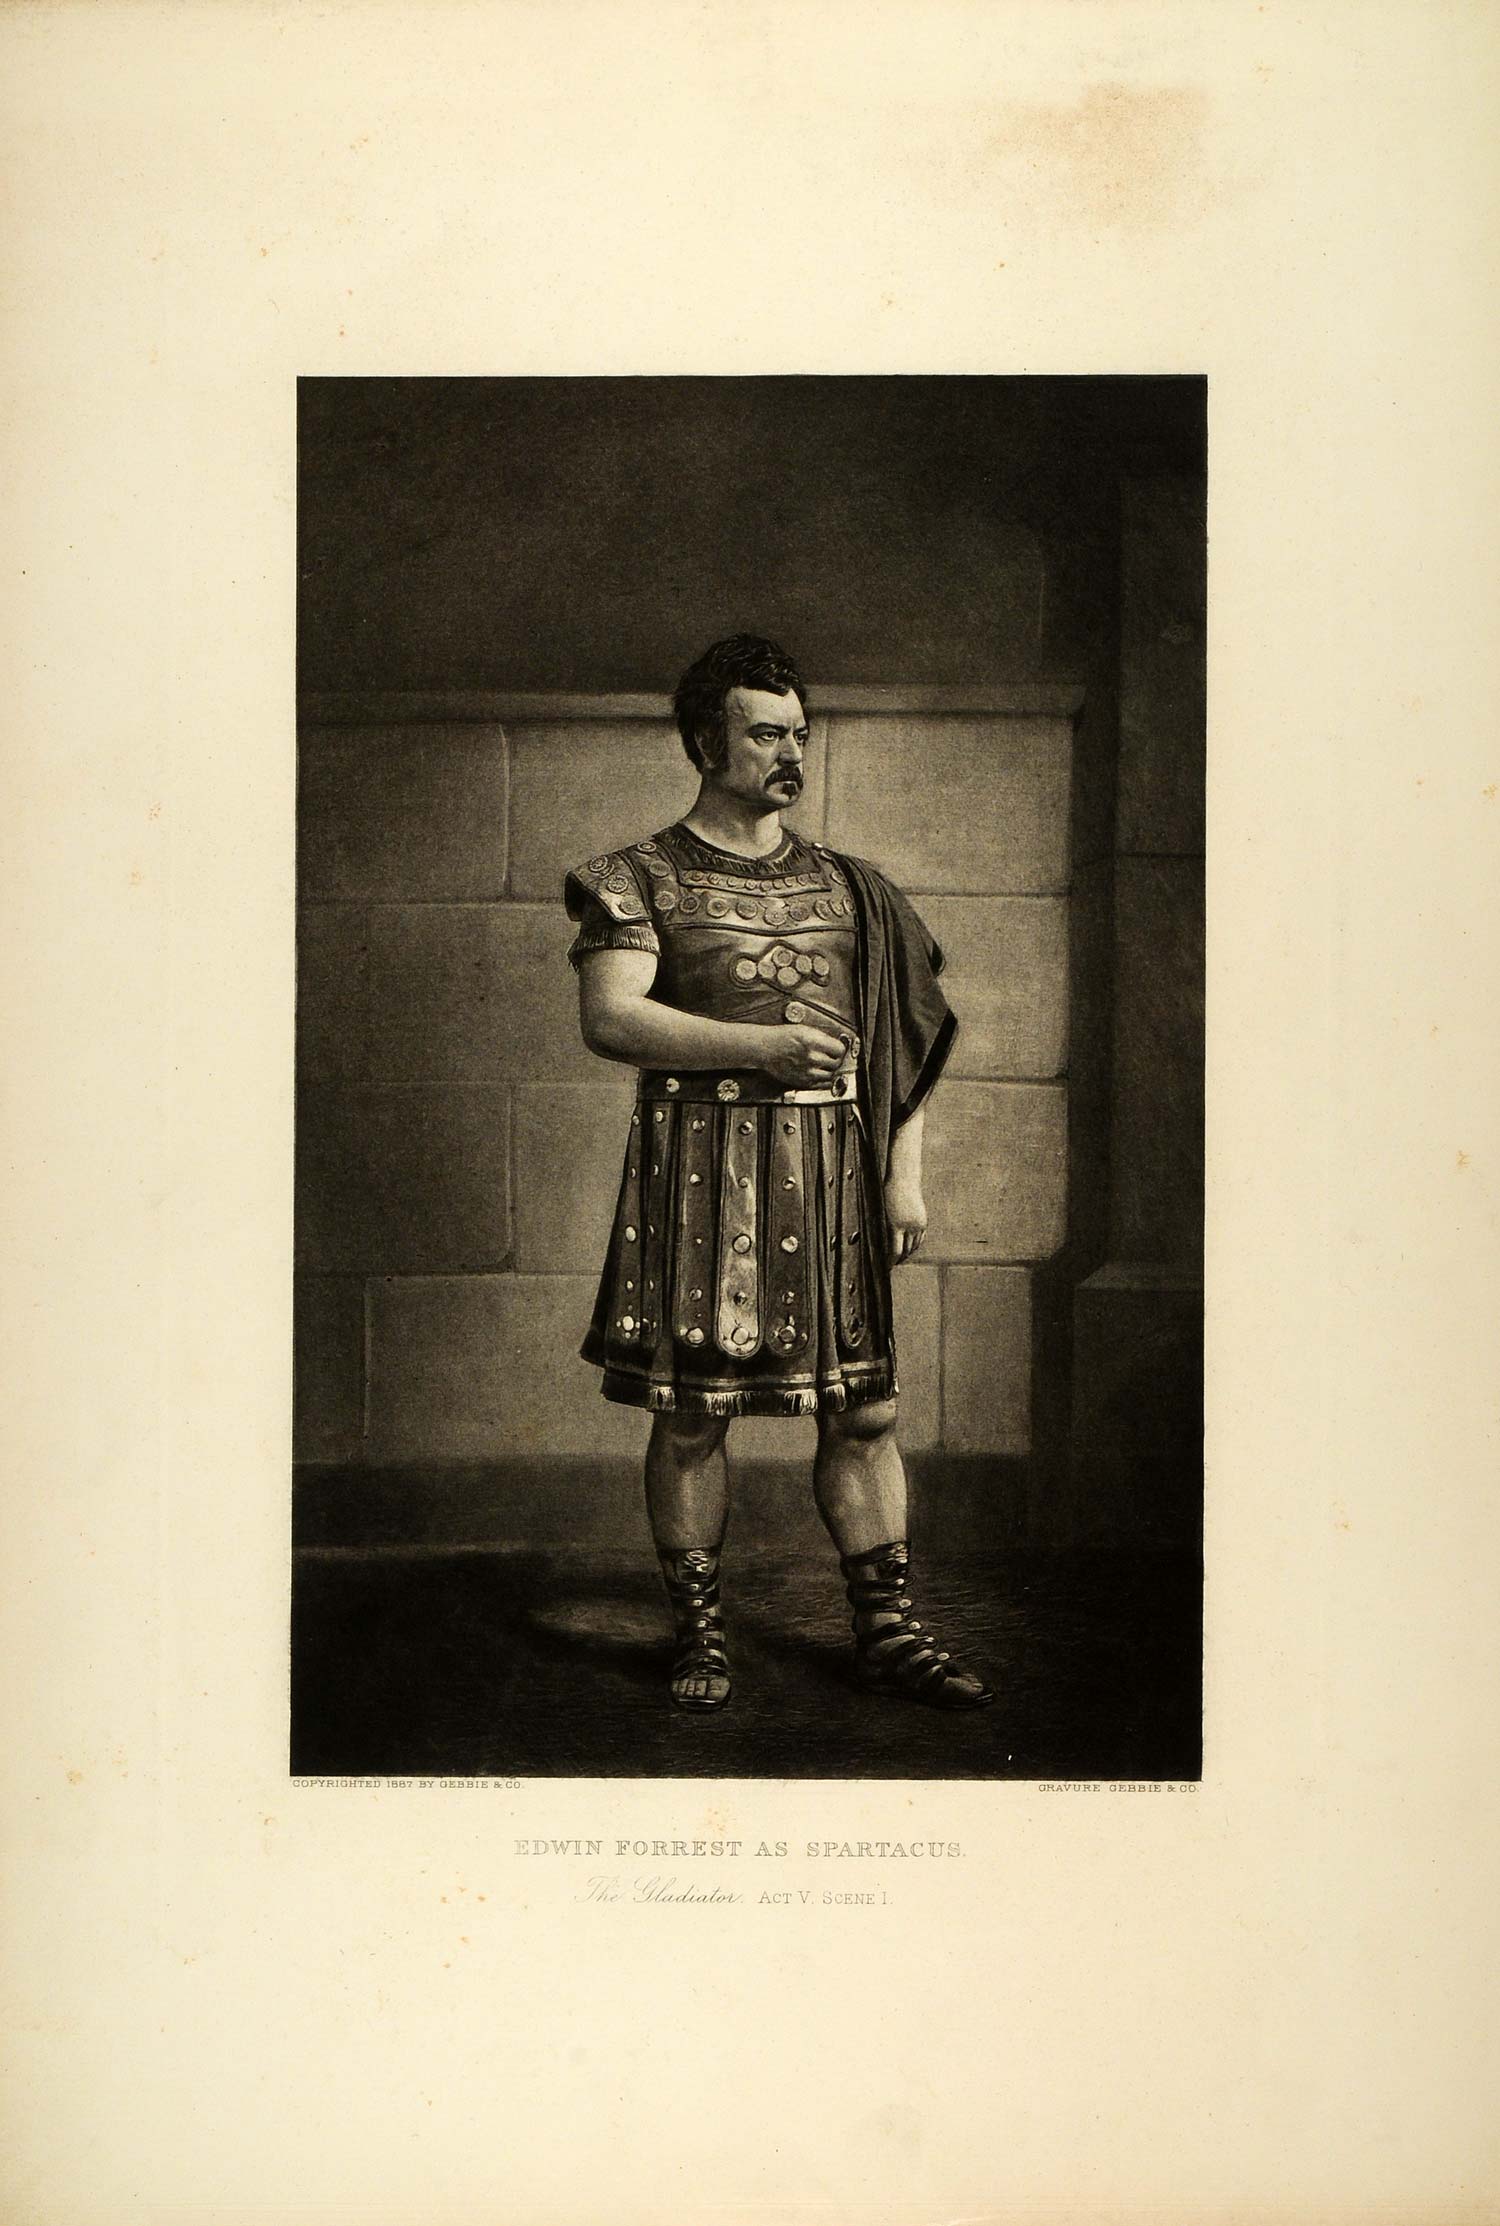 1887 Photogravure Edwin Forrest Spartacus Gladiator Play Robert Montgomery SAS1